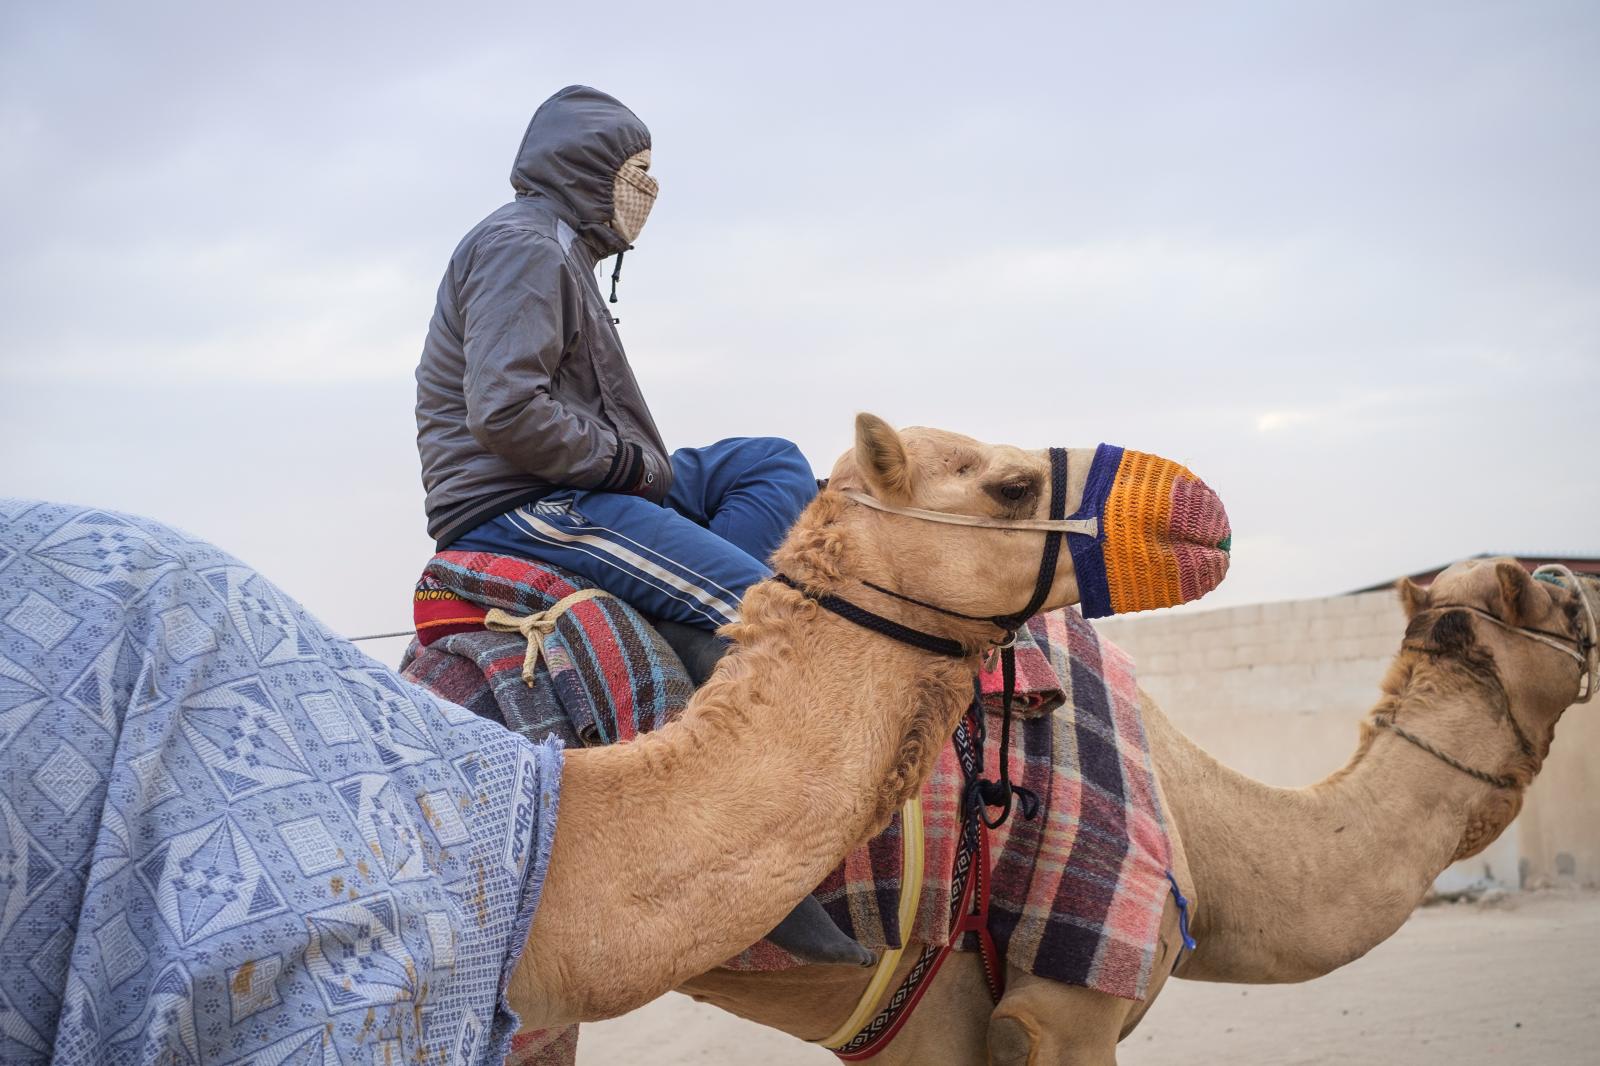 Training Camels at Al Shahaniya Camel Racetrack